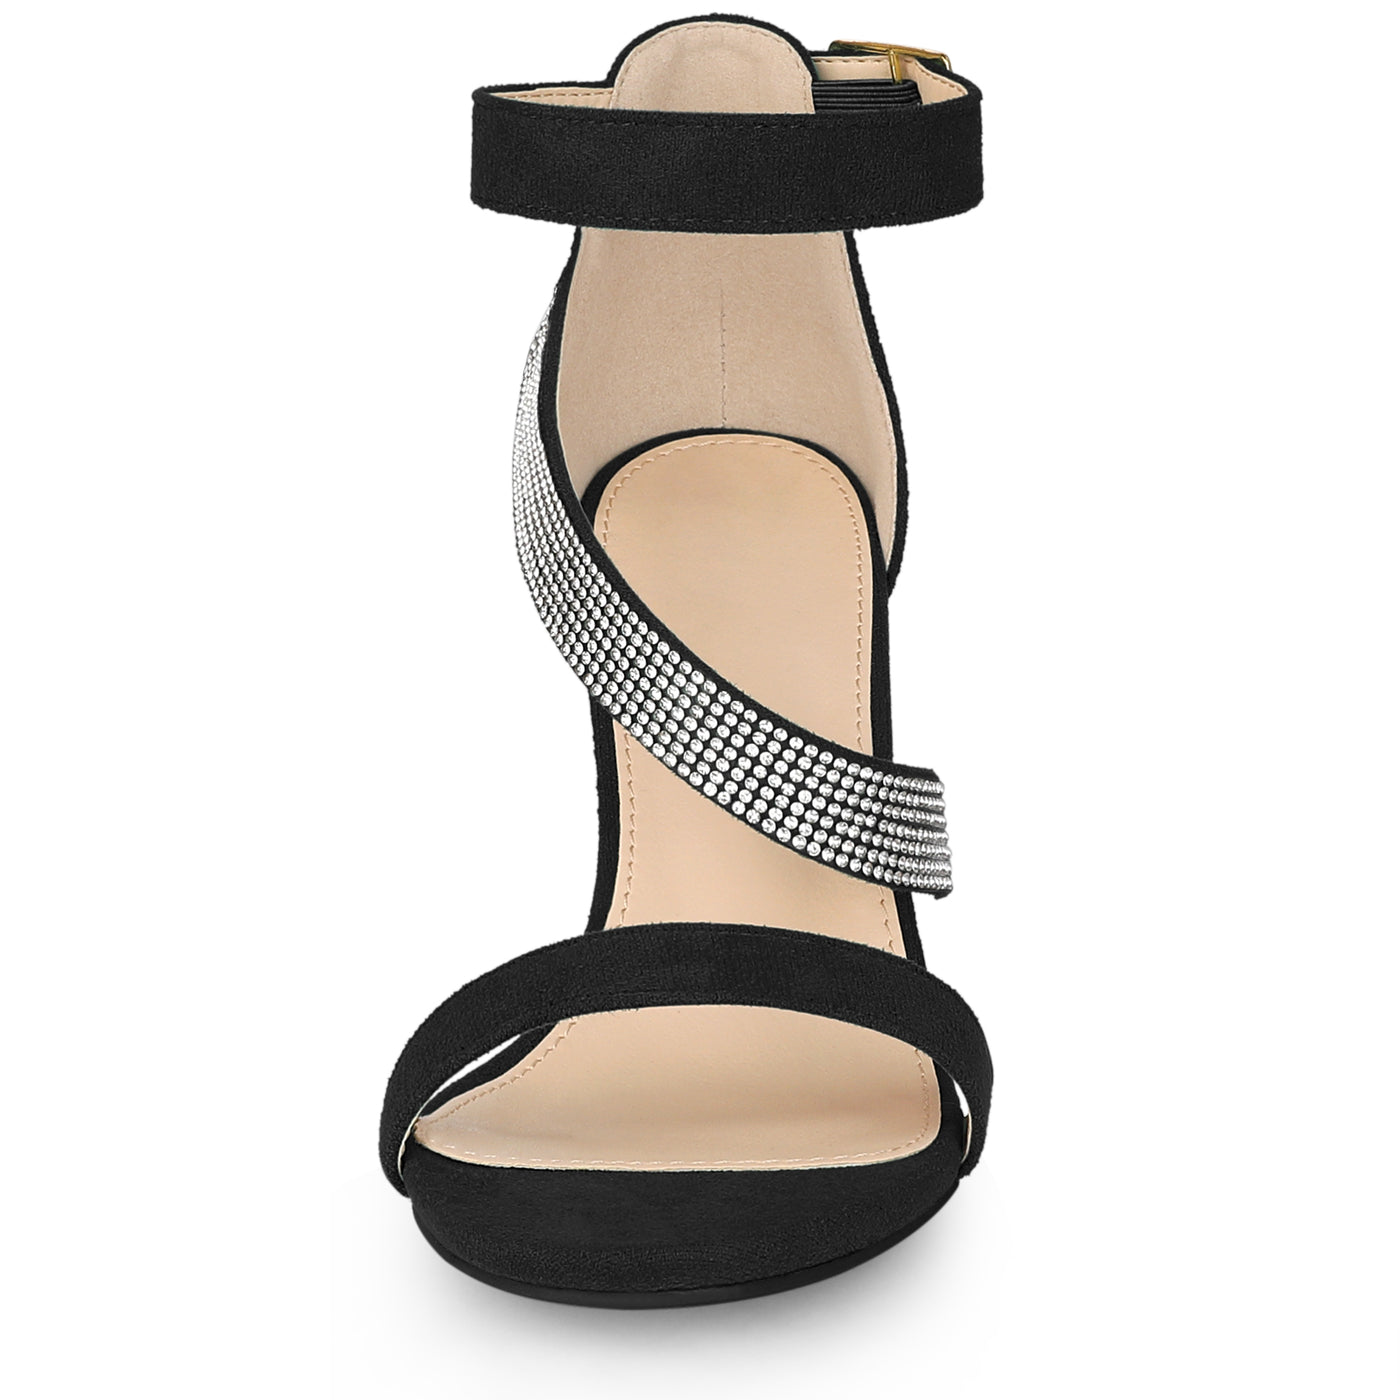 Allegra K Women's Rhinestone Open Toe Block Heels Sandals